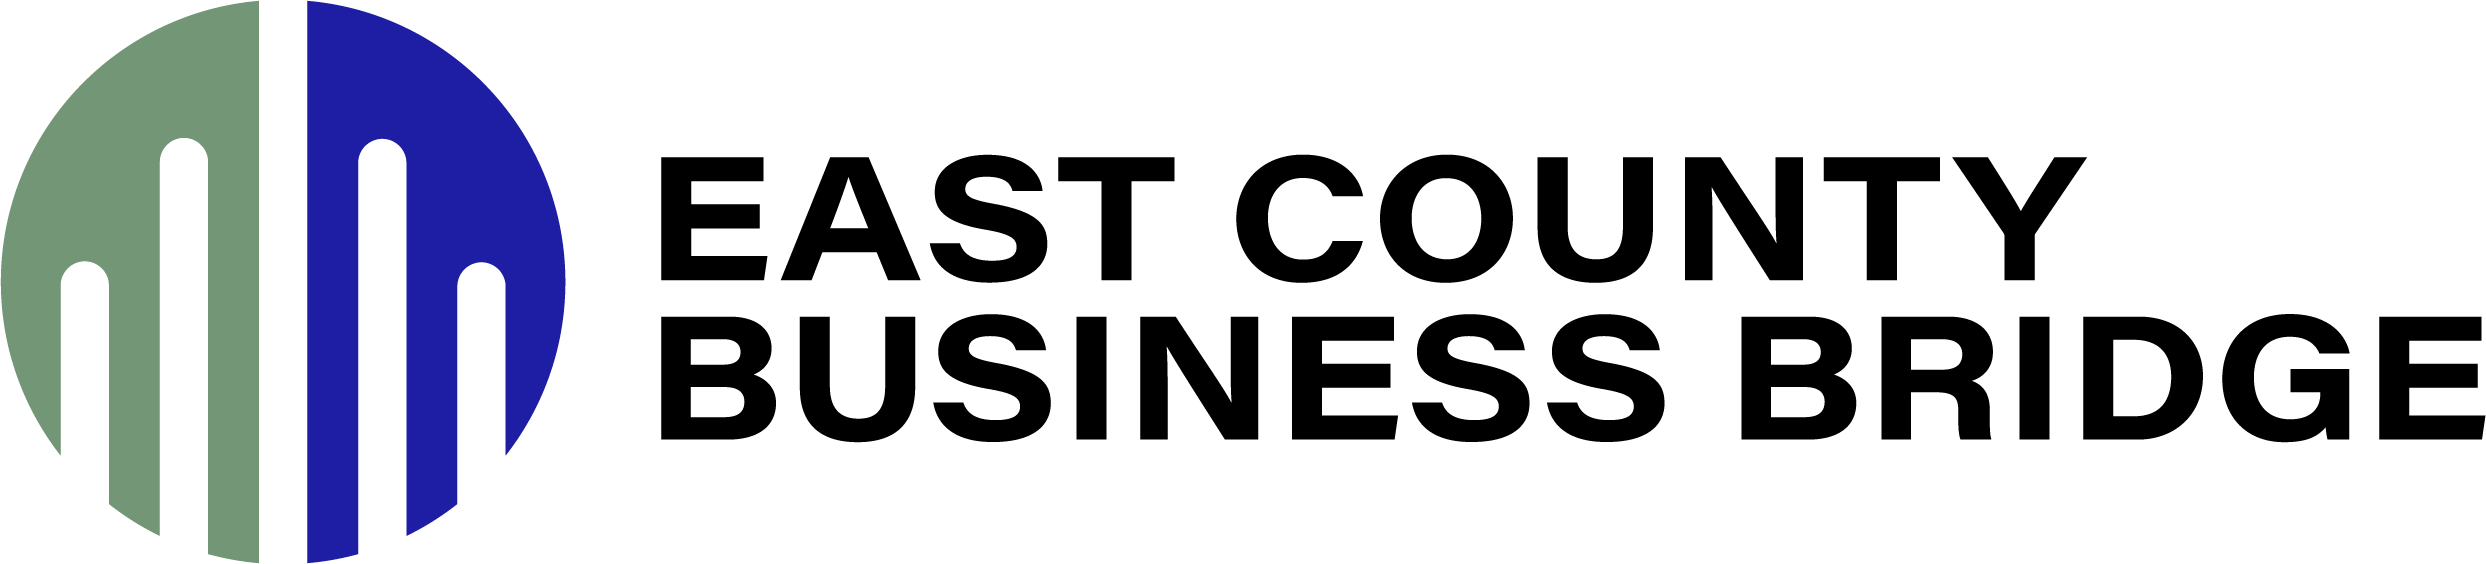 ECCB-logo-horizontal_bluegreen